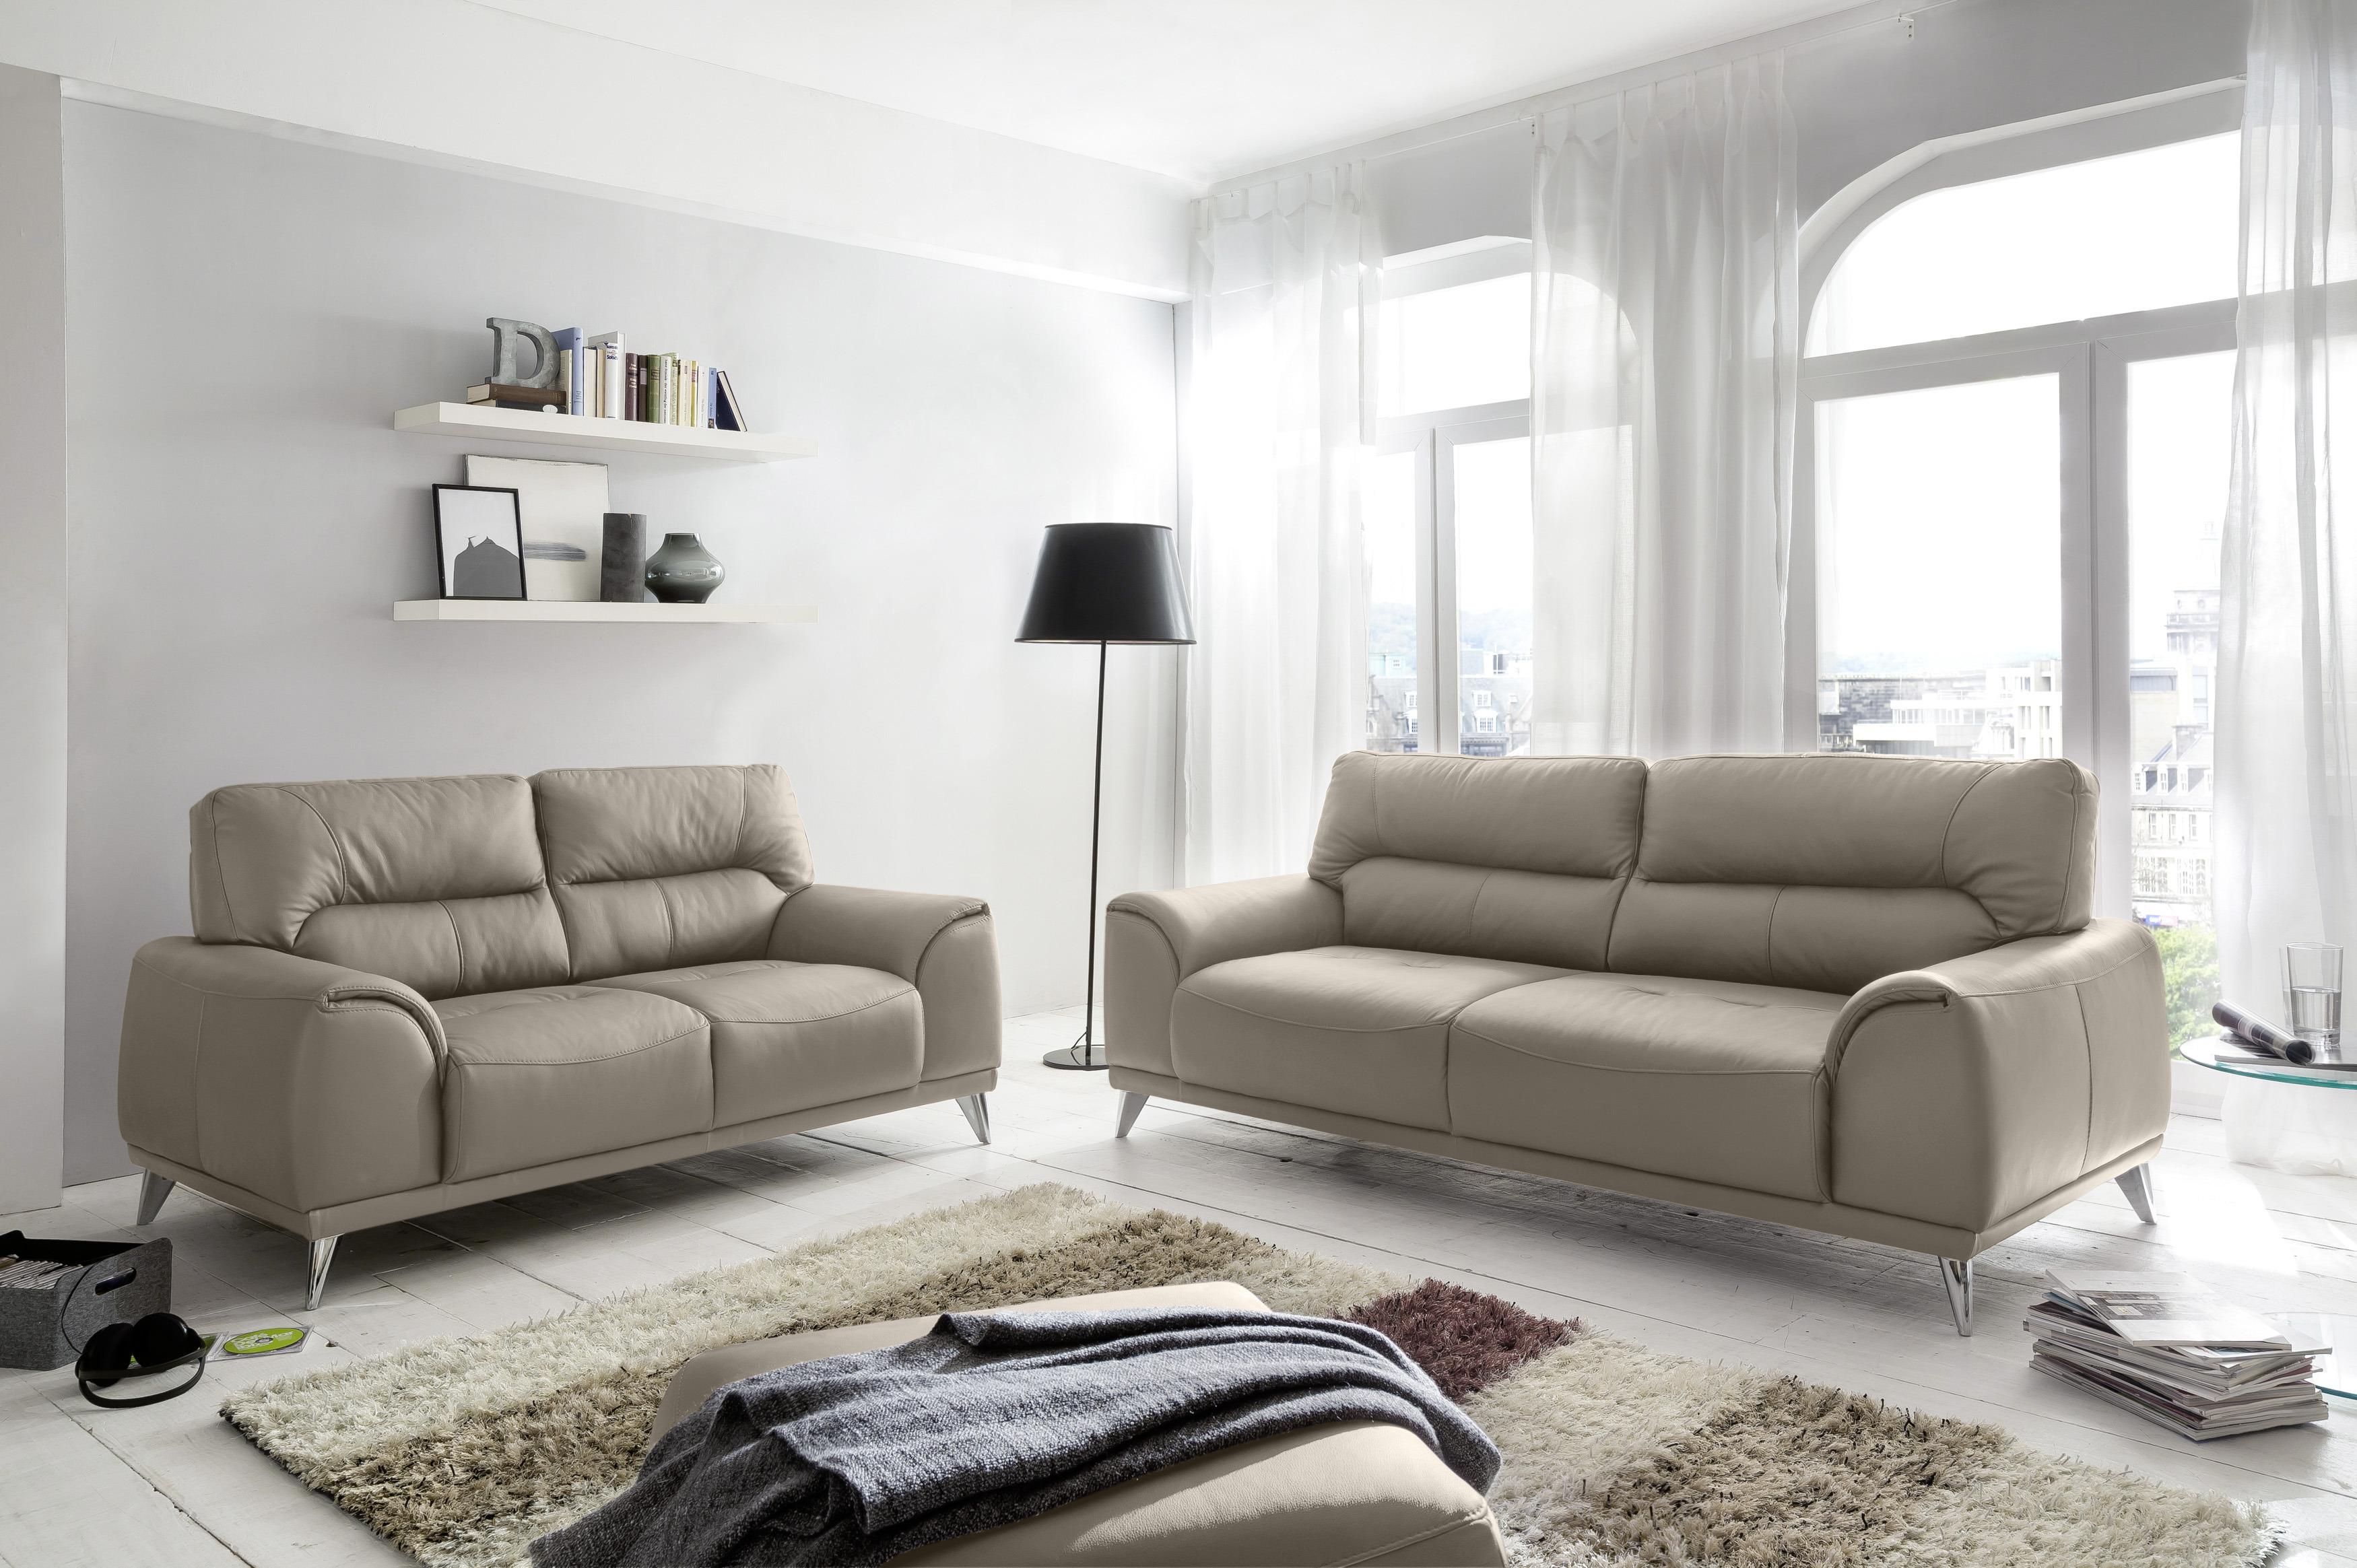 Dreisitzer-Sofa Frisco, Lederlook - Sandfarben/Chromfarben, MODERN, Textil (210/92/96cm) - MID.YOU